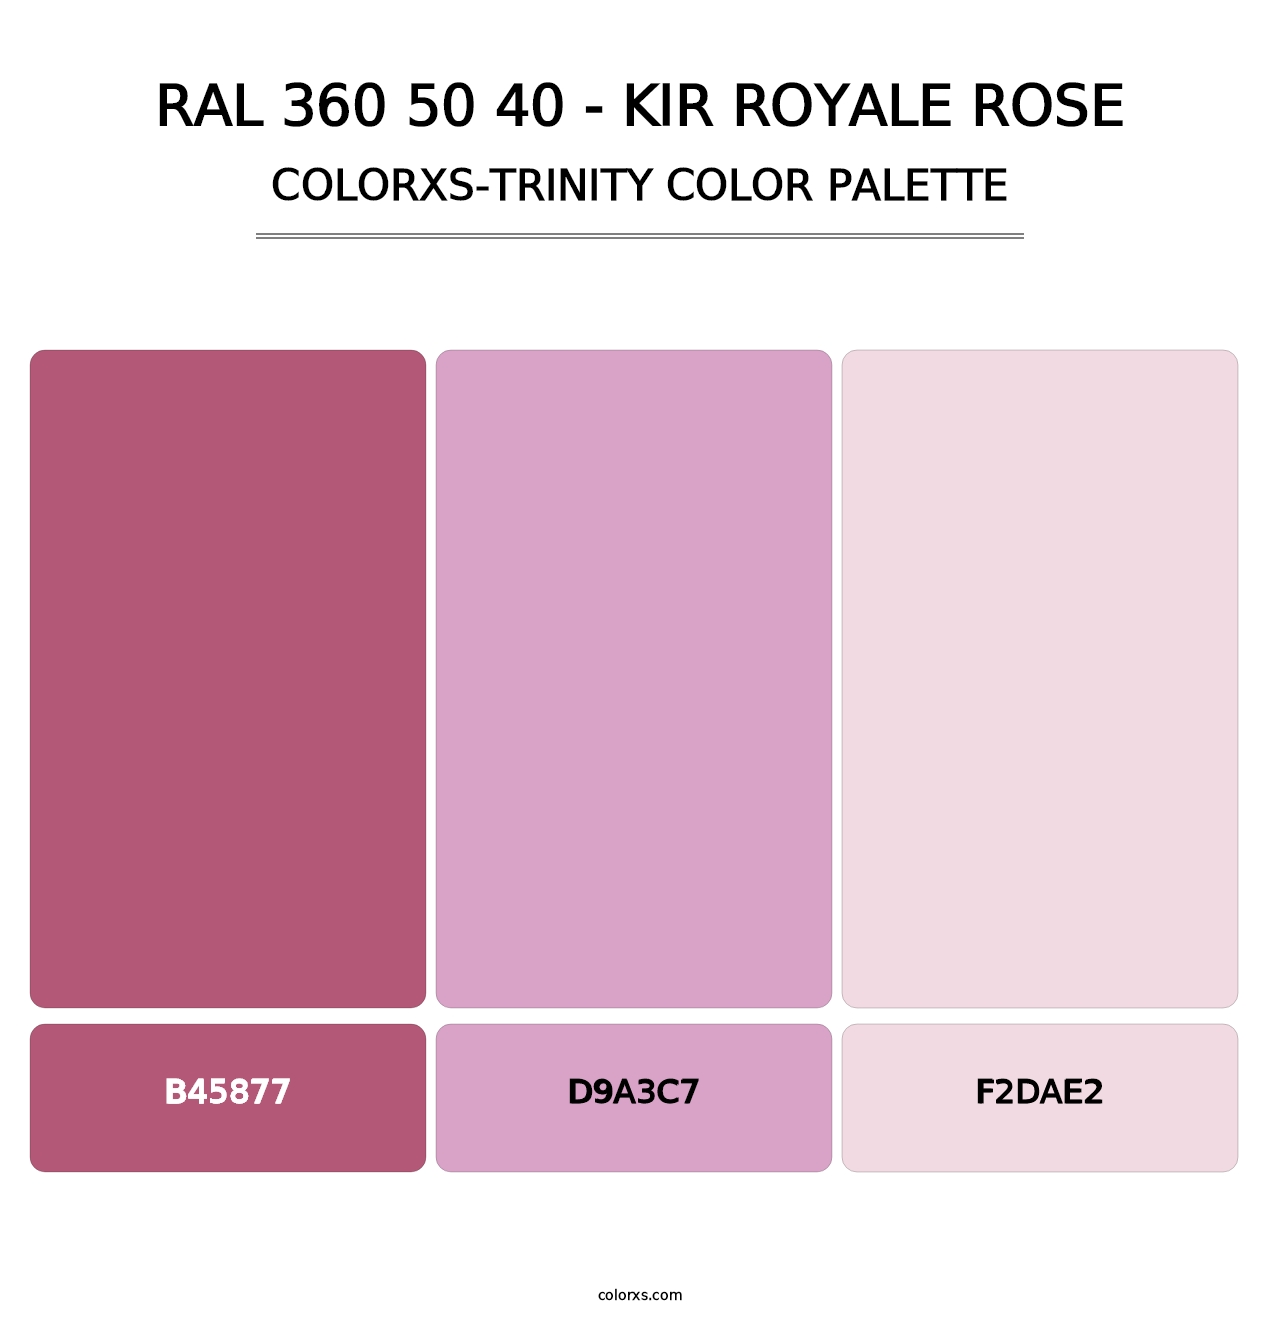 RAL 360 50 40 - Kir Royale Rose - Colorxs Trinity Palette